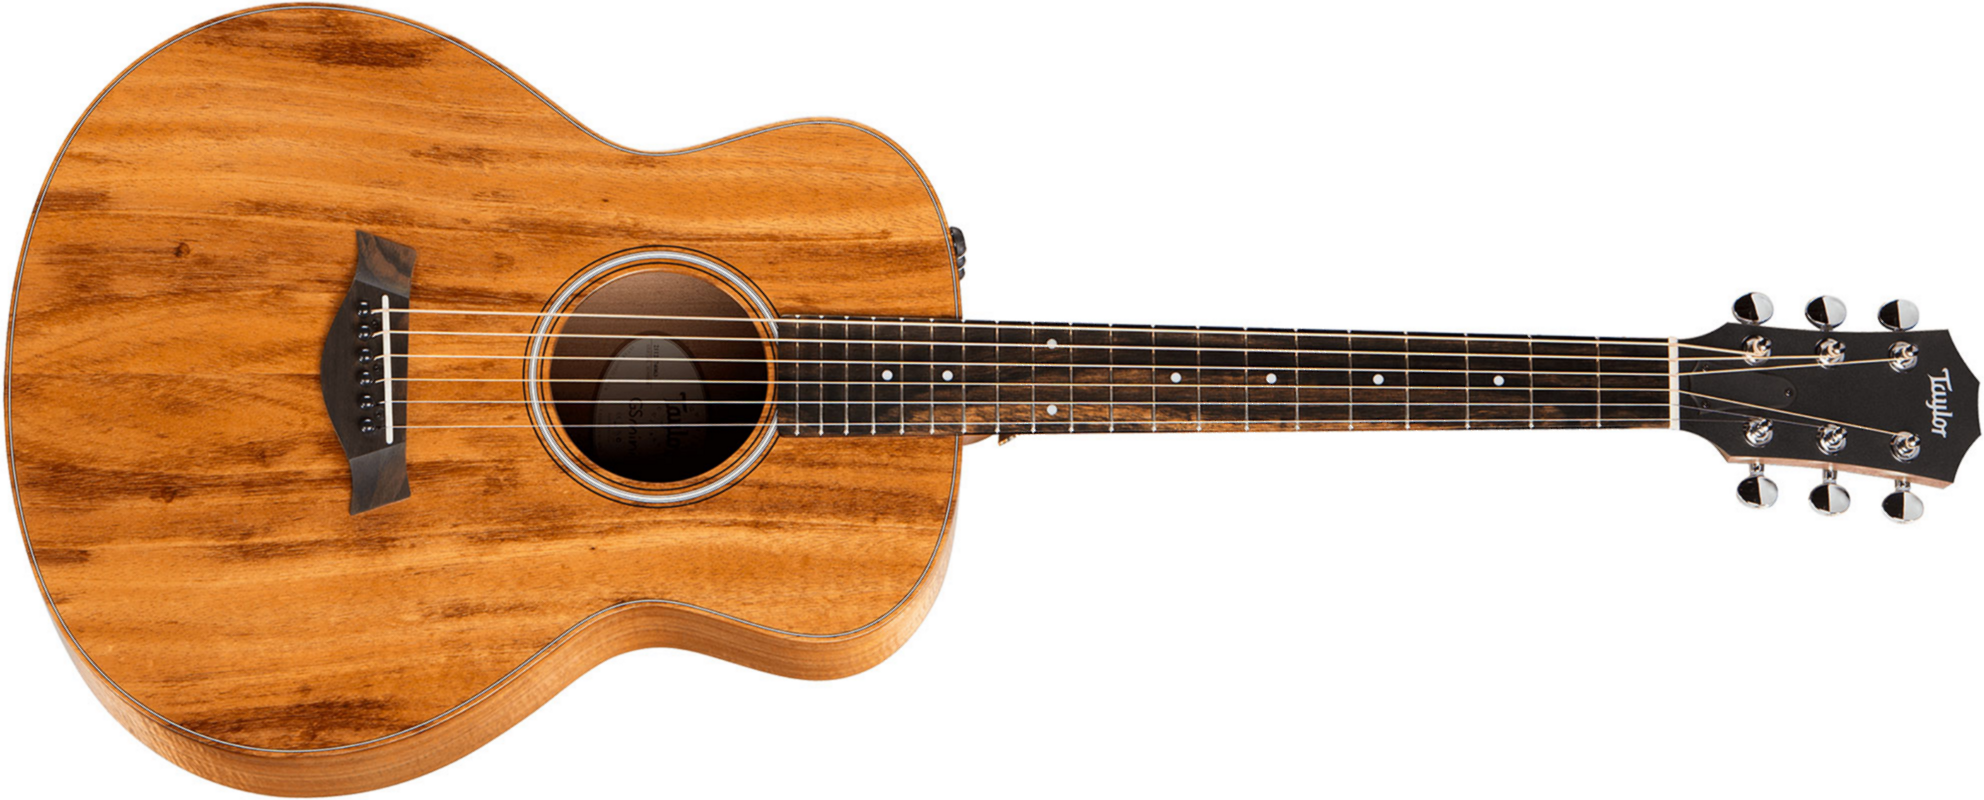 Taylor Gs Mini-e Koa Esb - Natural - Travel acoustic guitar - Main picture